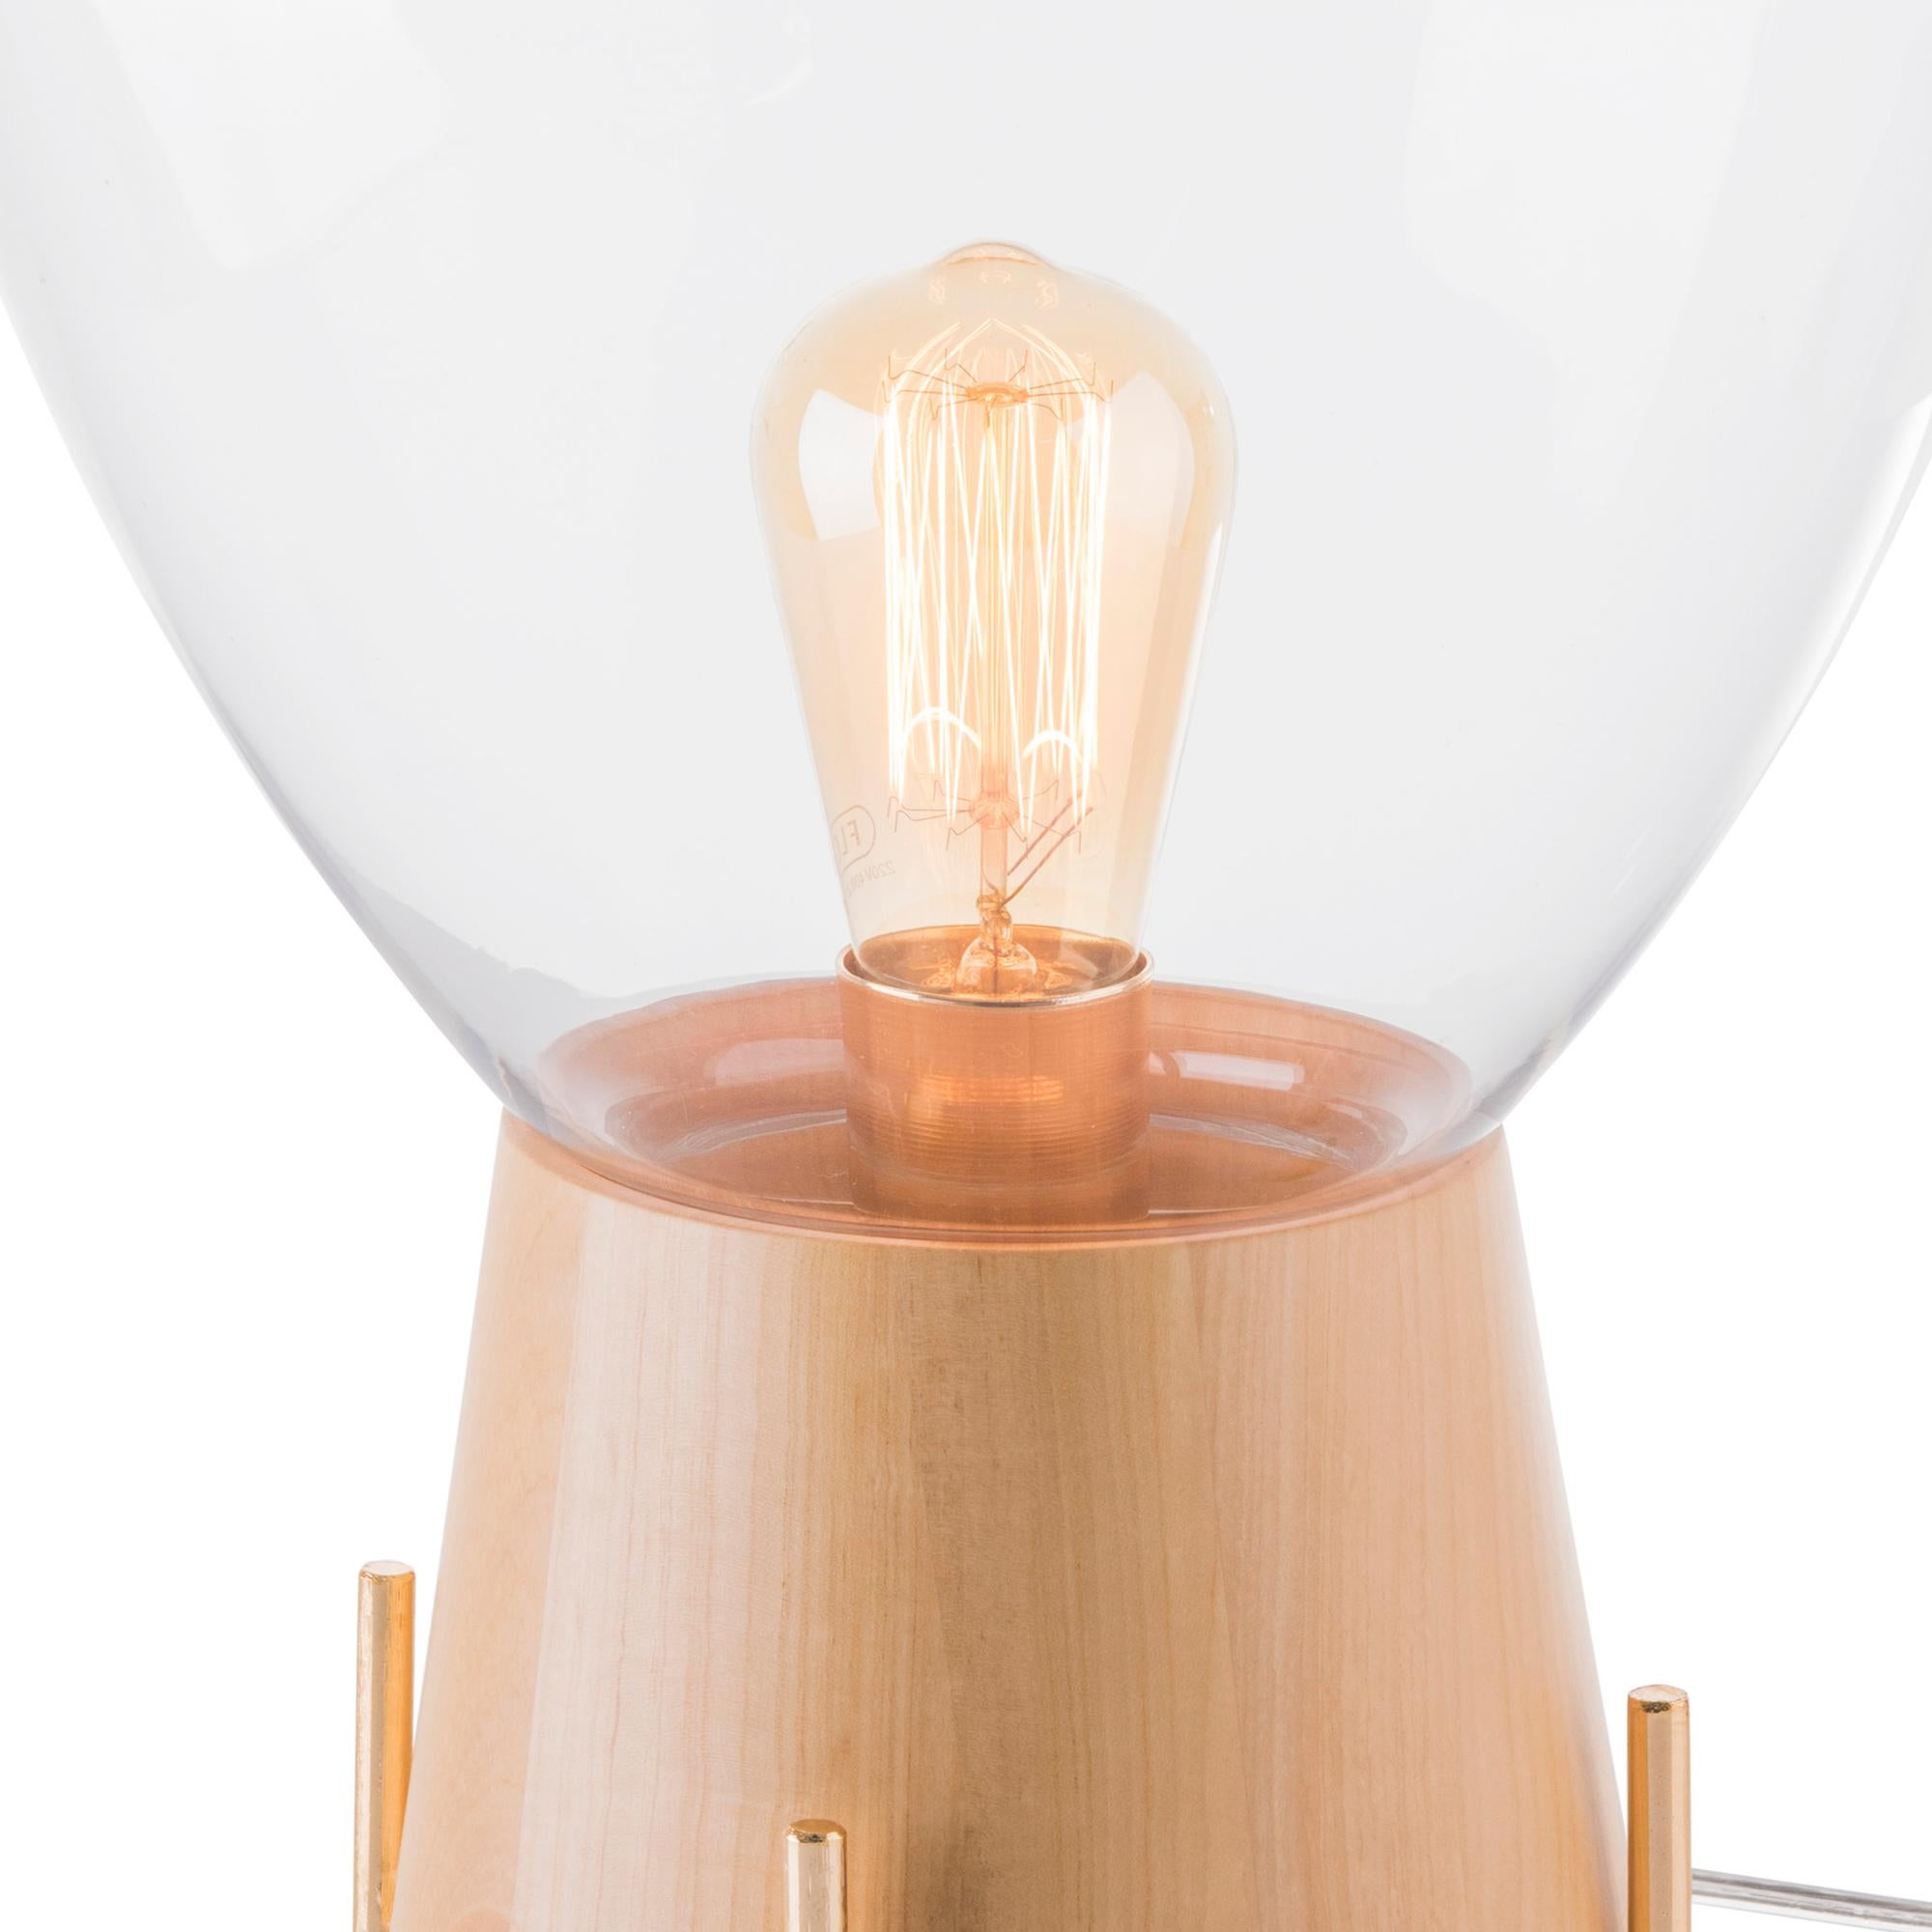 Table Lamp Lampadari #3, Brazilian Wood, Metal and Glass In New Condition For Sale In Bento Goncalves, Rio Grande do Sul